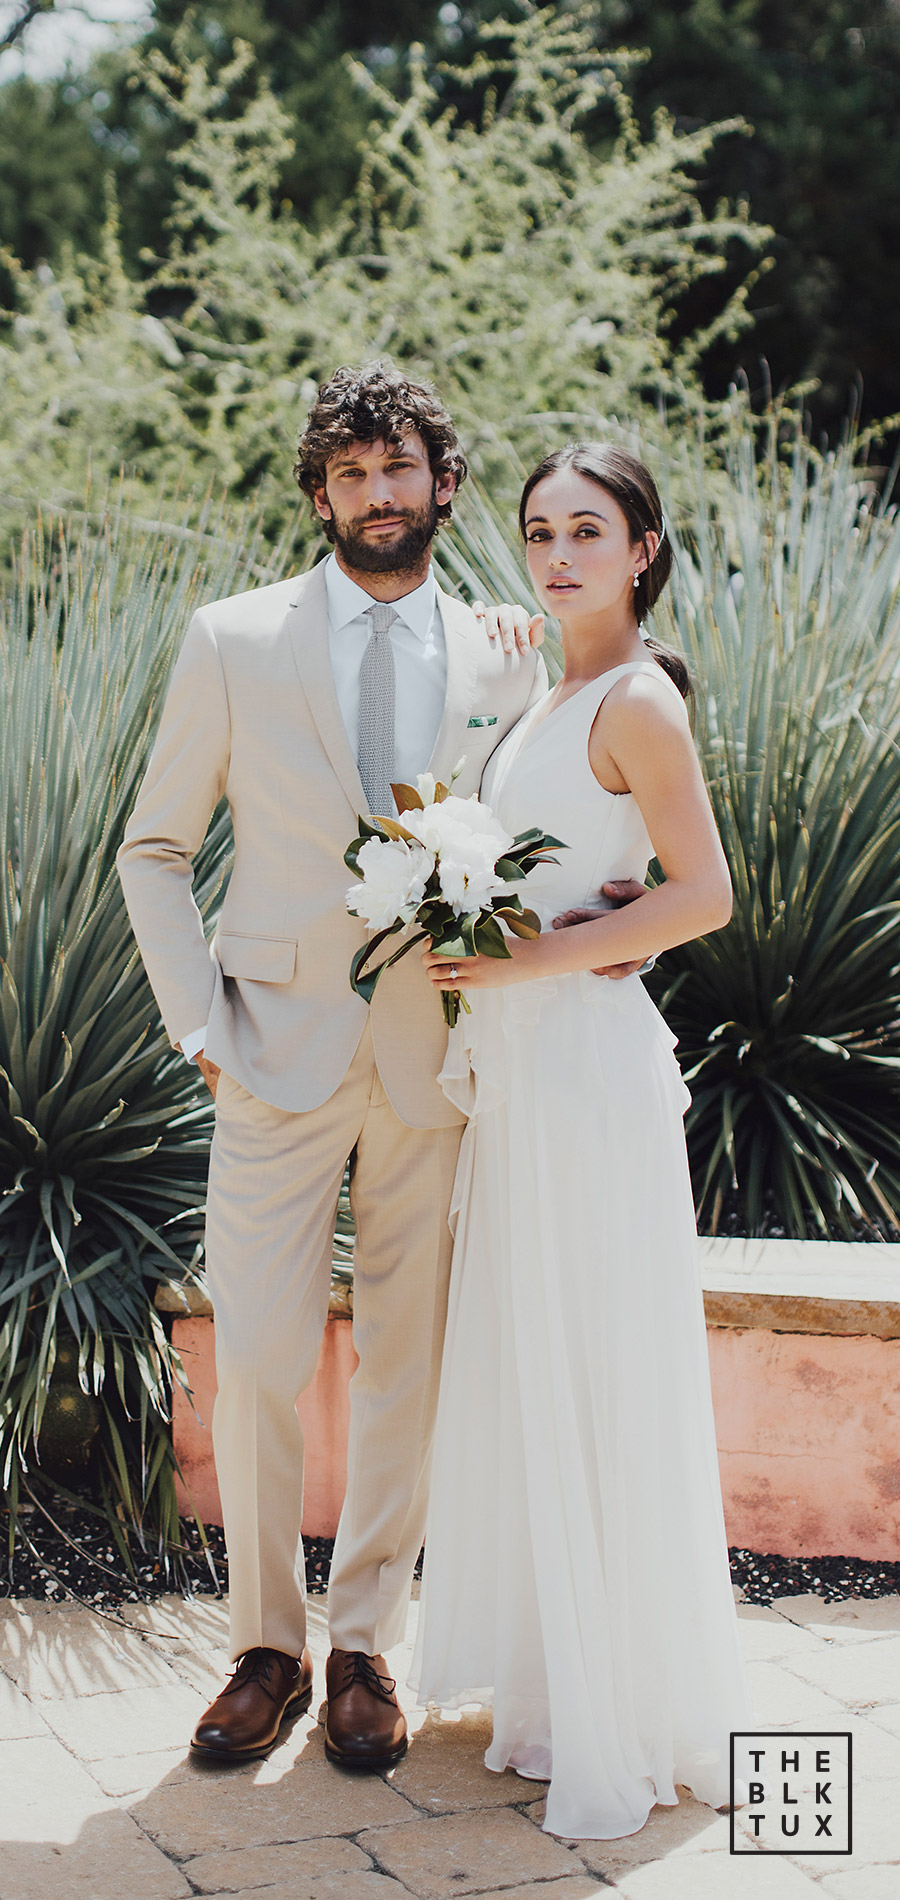 the black tux 2017 online tuxedo rental service tan suit casual wedding dress style inspiration